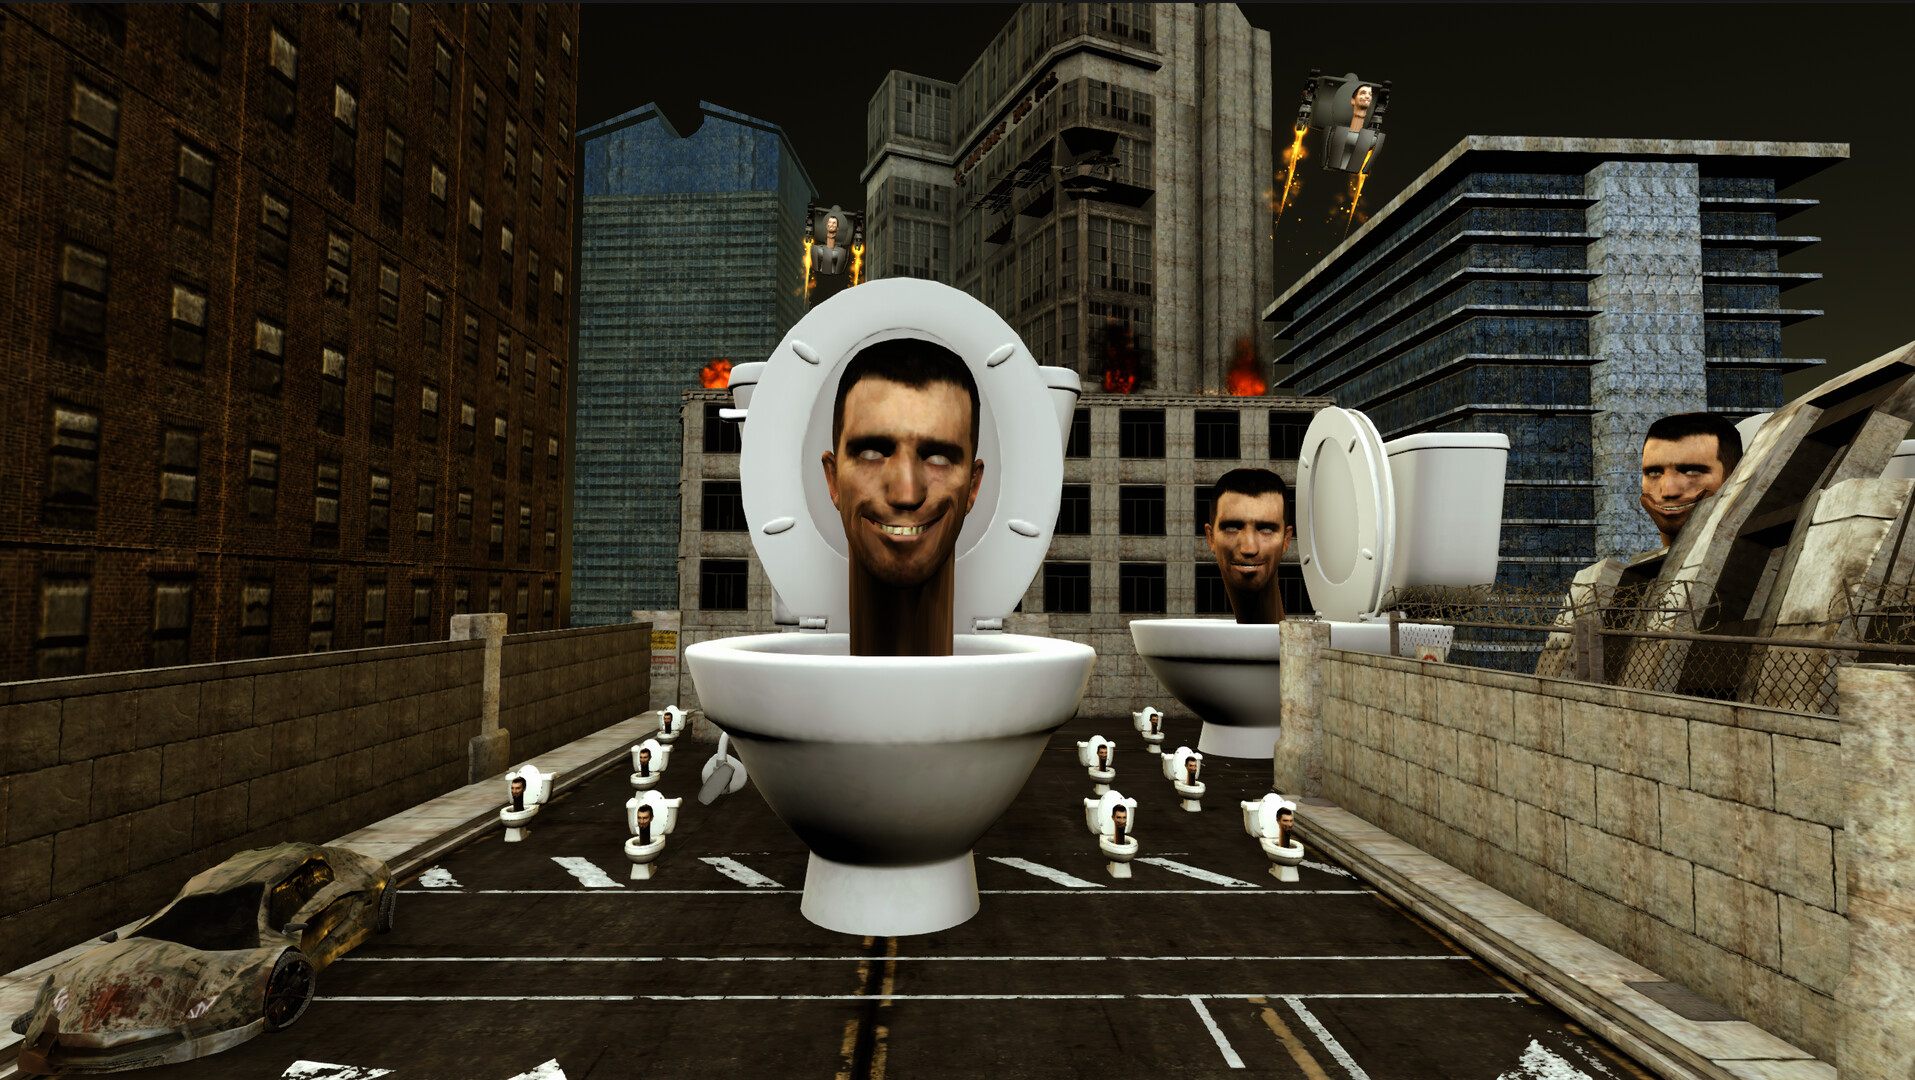 Steam Workshop::skibidi toilet